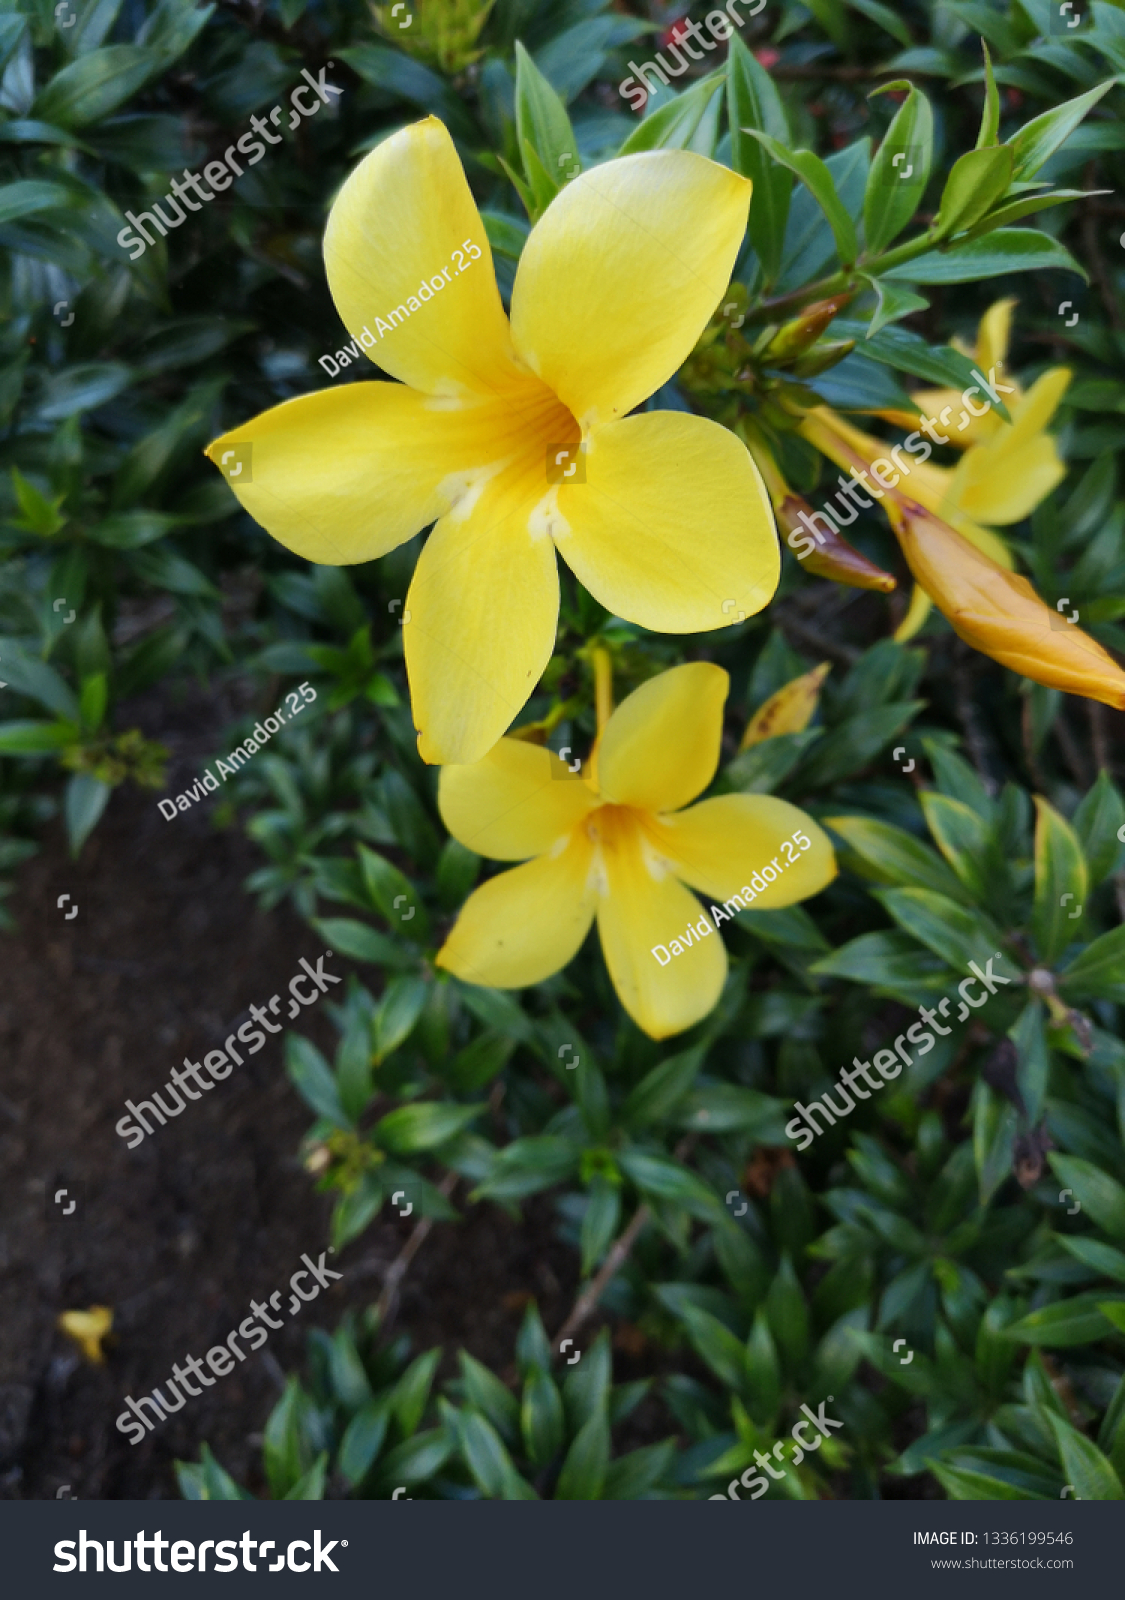 Yellow flower in a garden. Costa Rica #1336199546